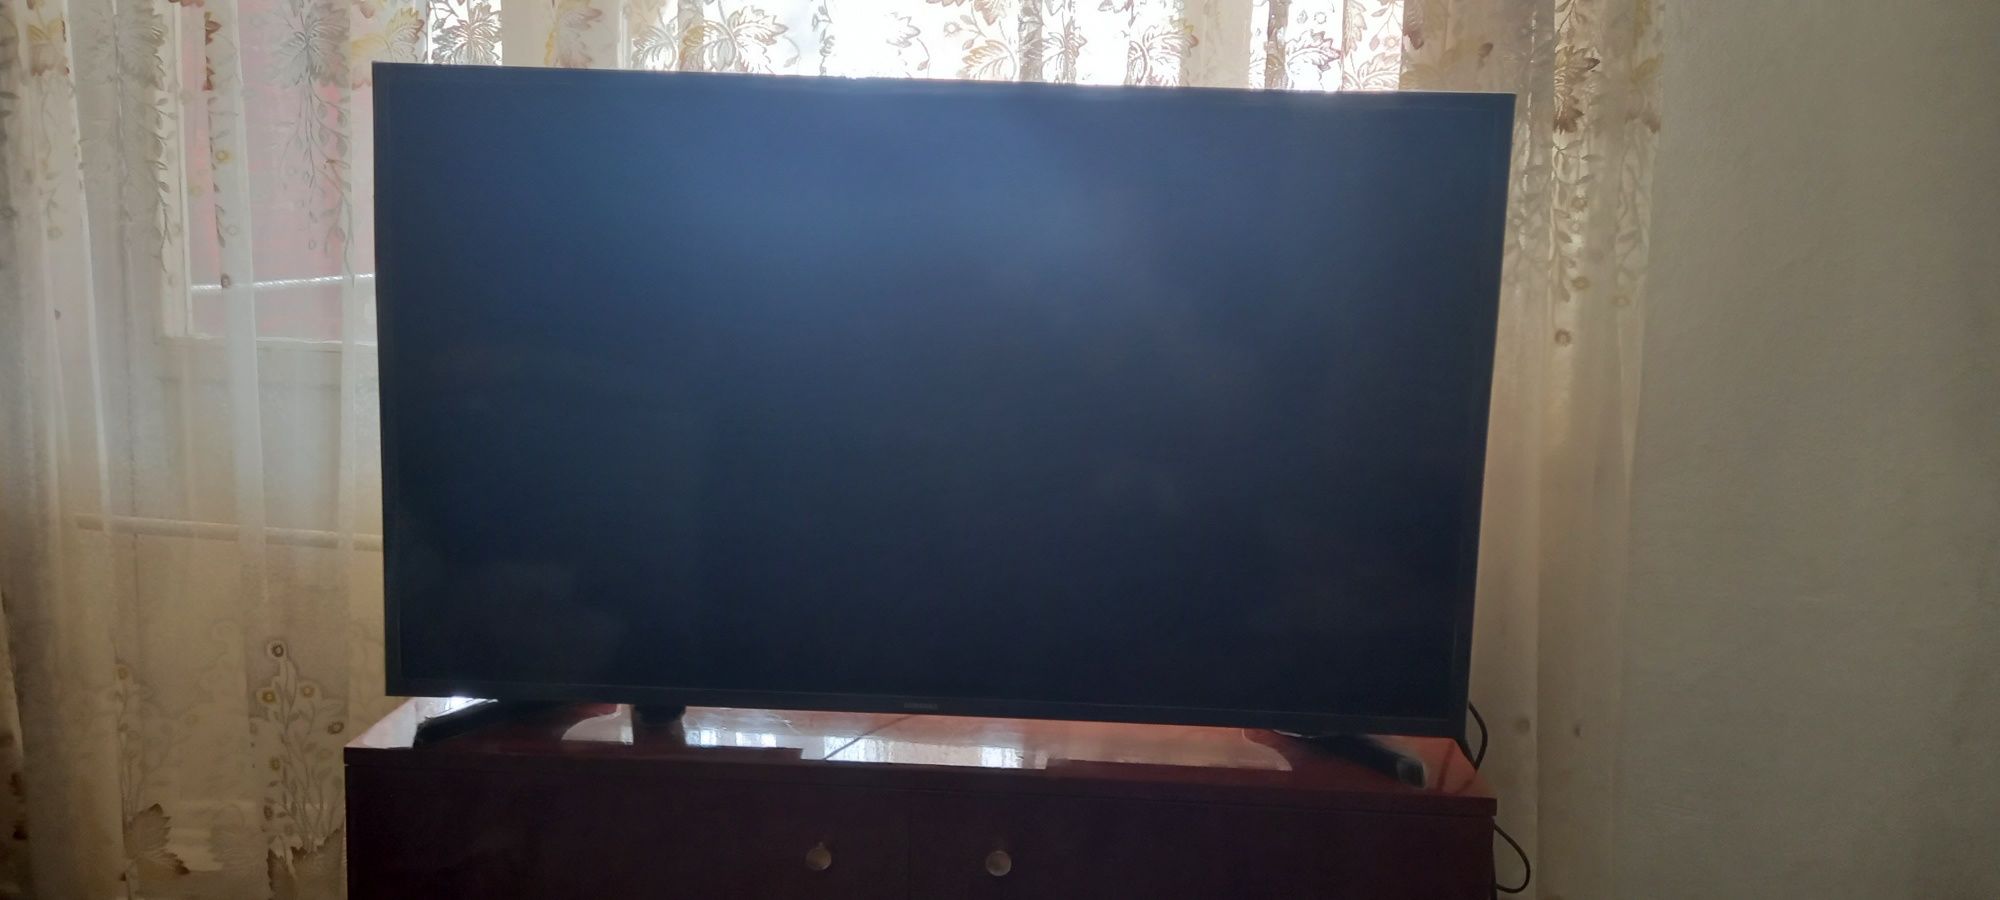 Телевизор Samsung сломан экран